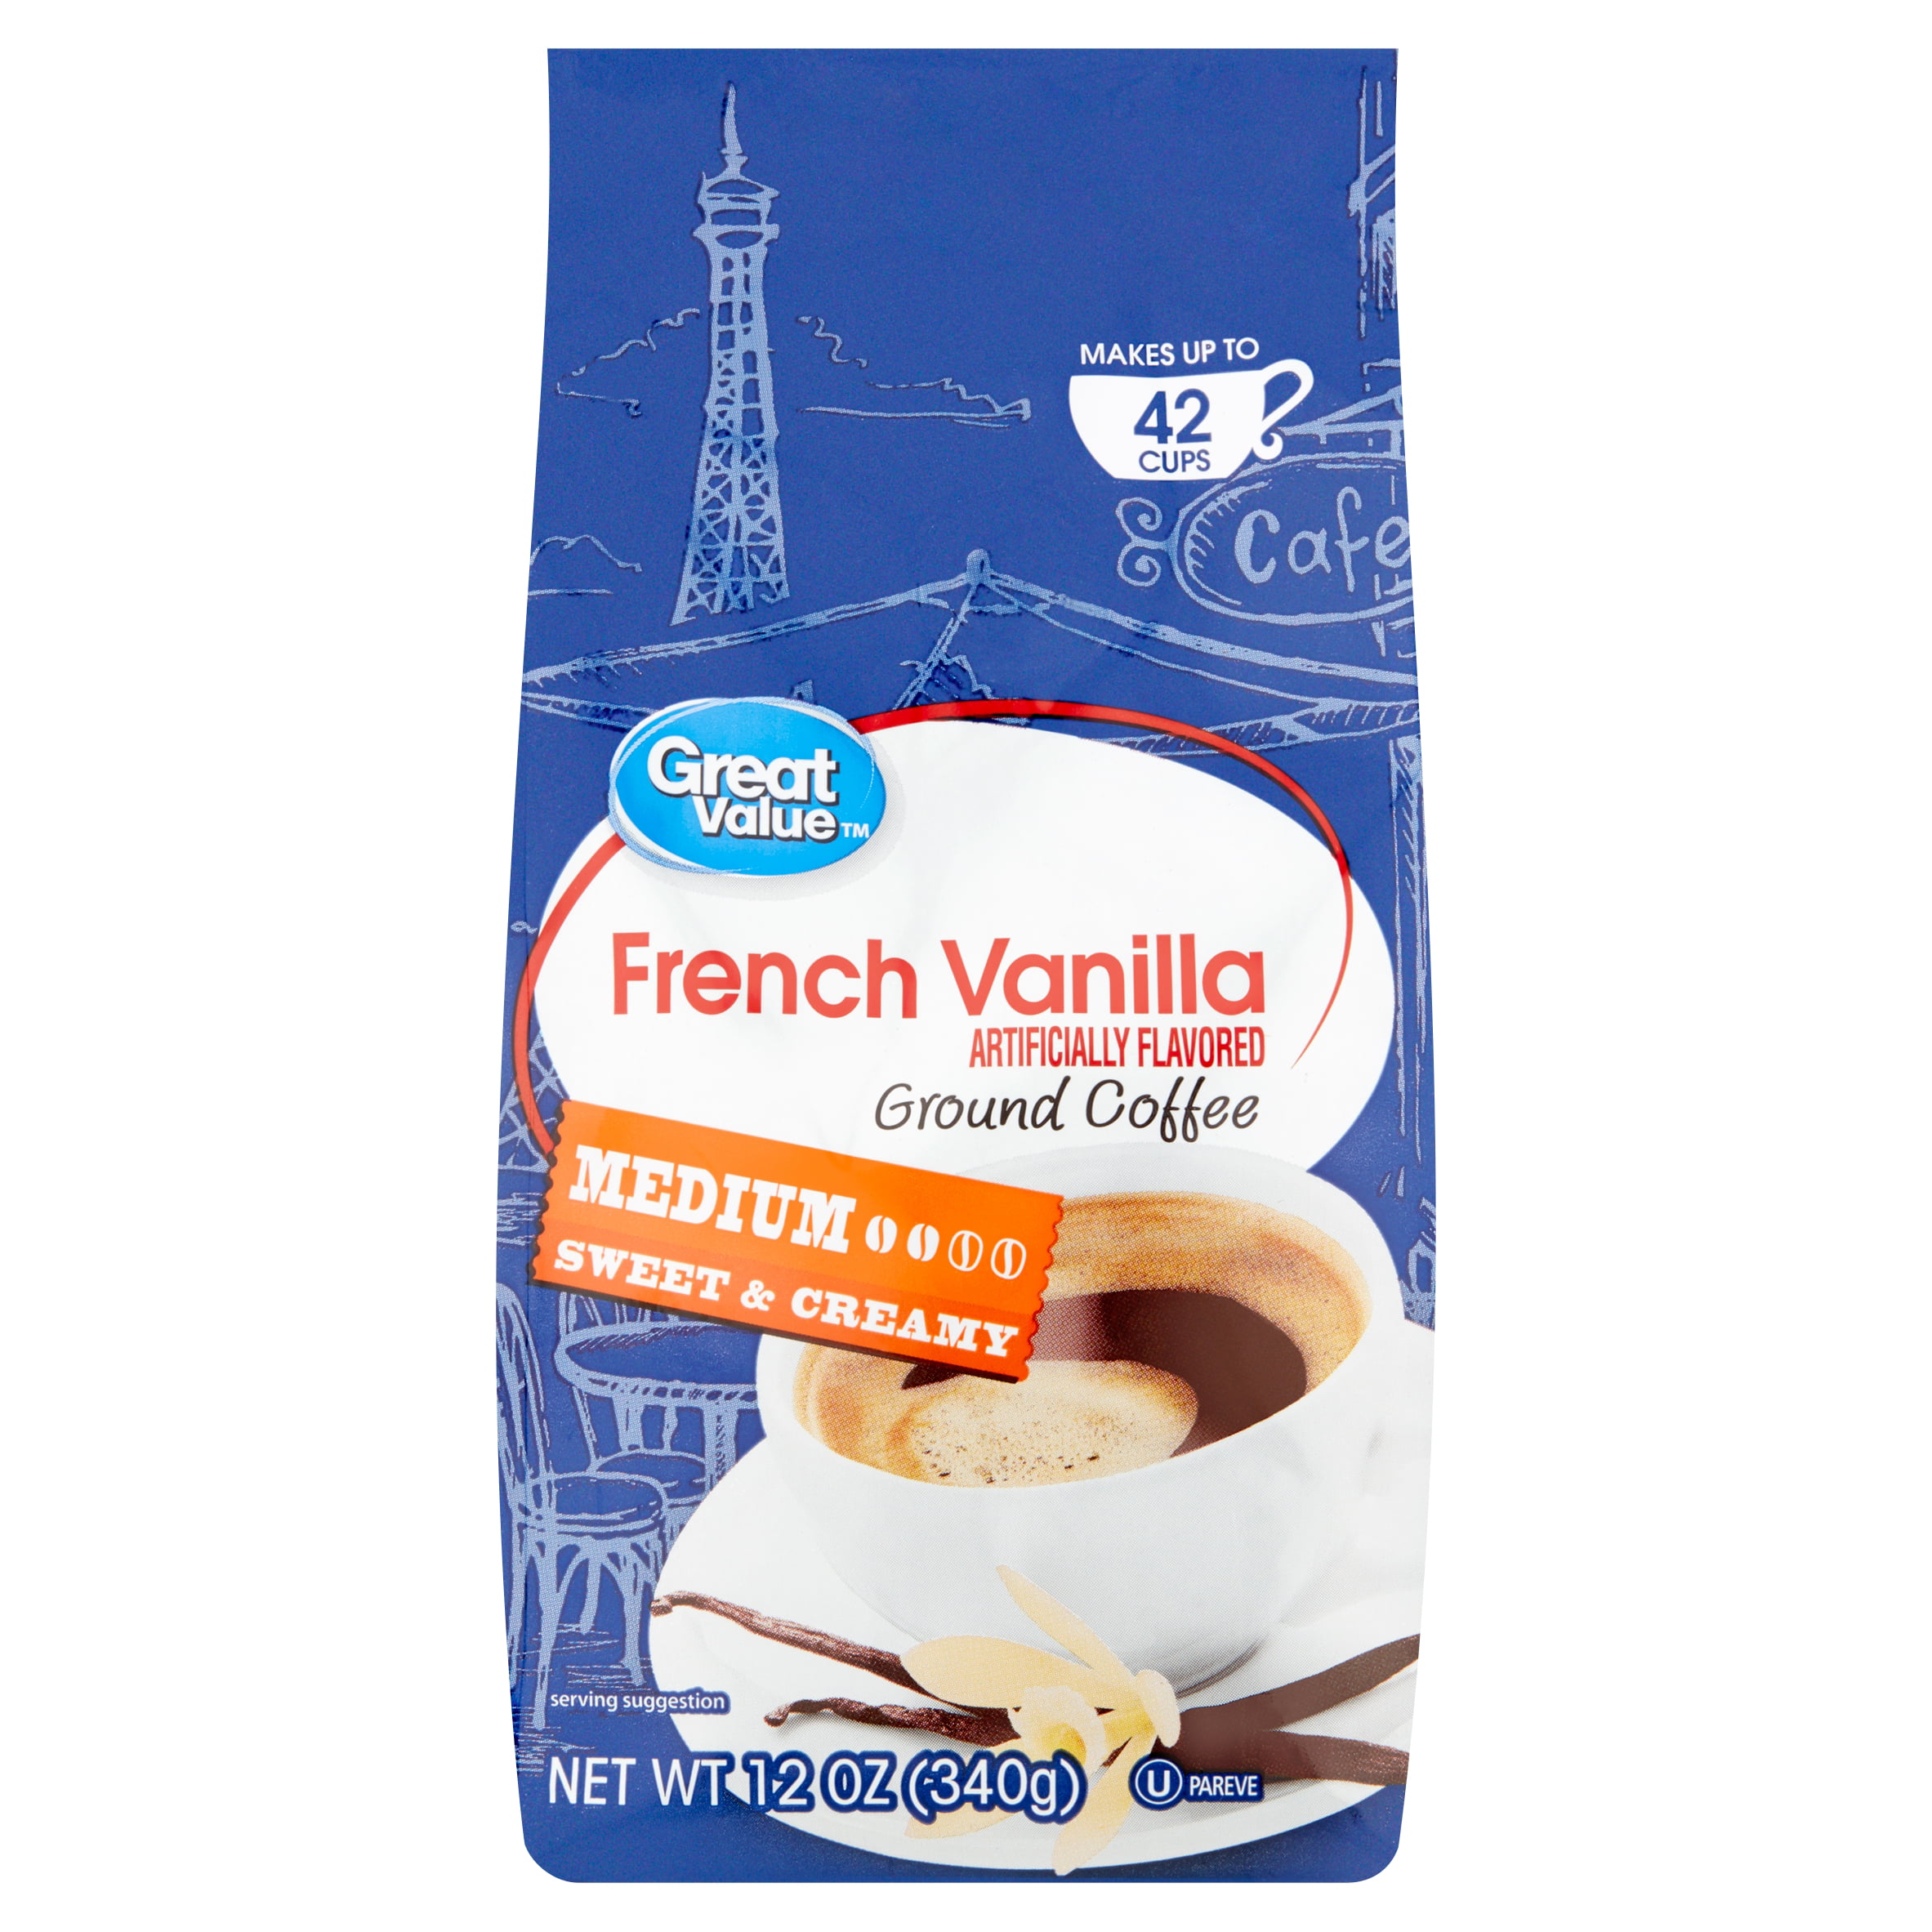 French vanilla. French values.